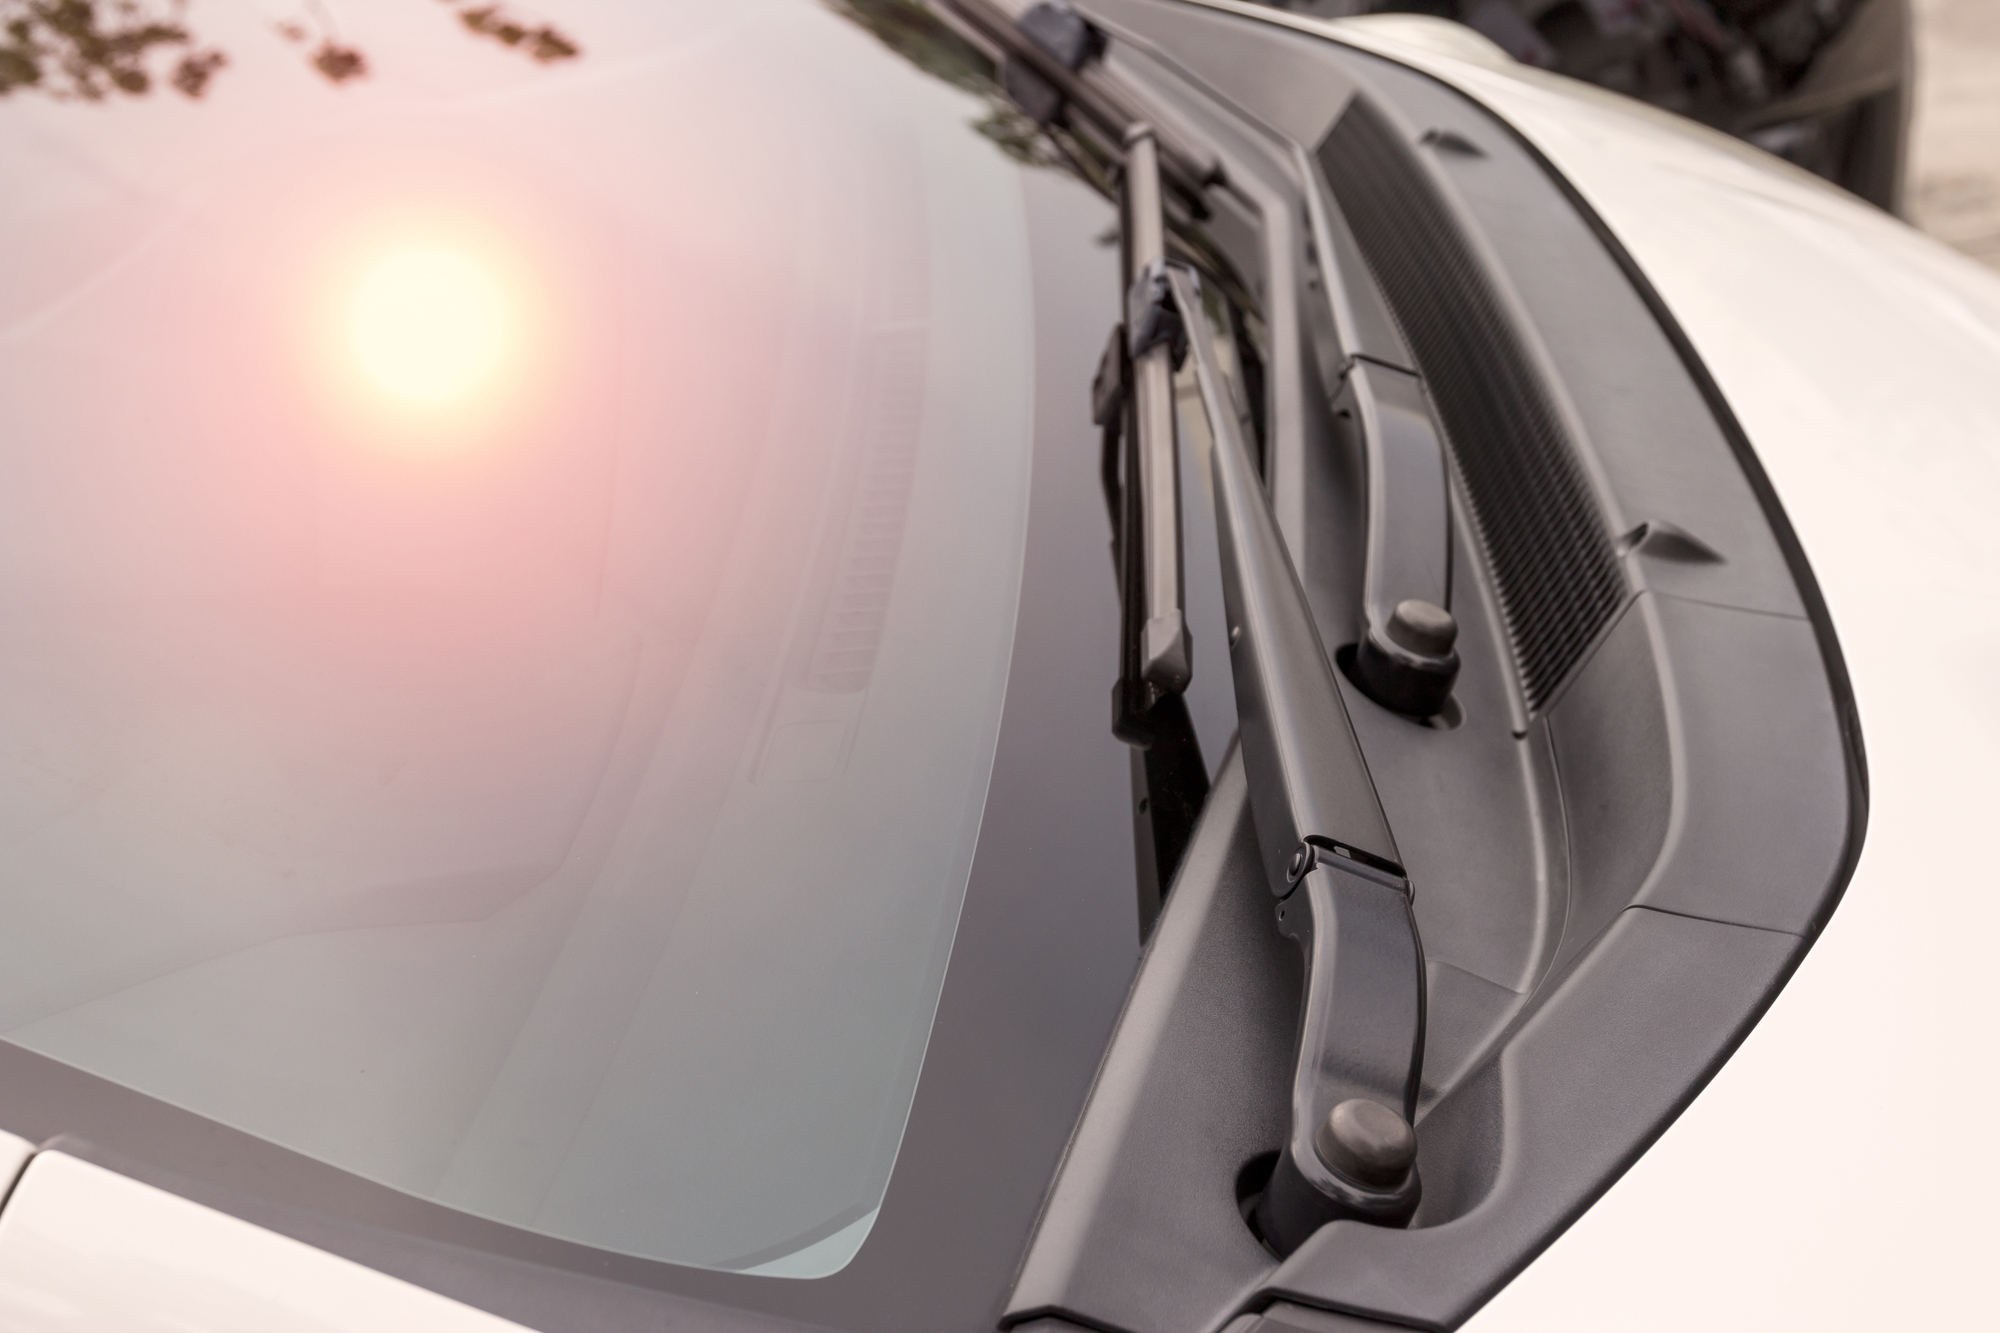 Sun reflection on car's windshield, close-up